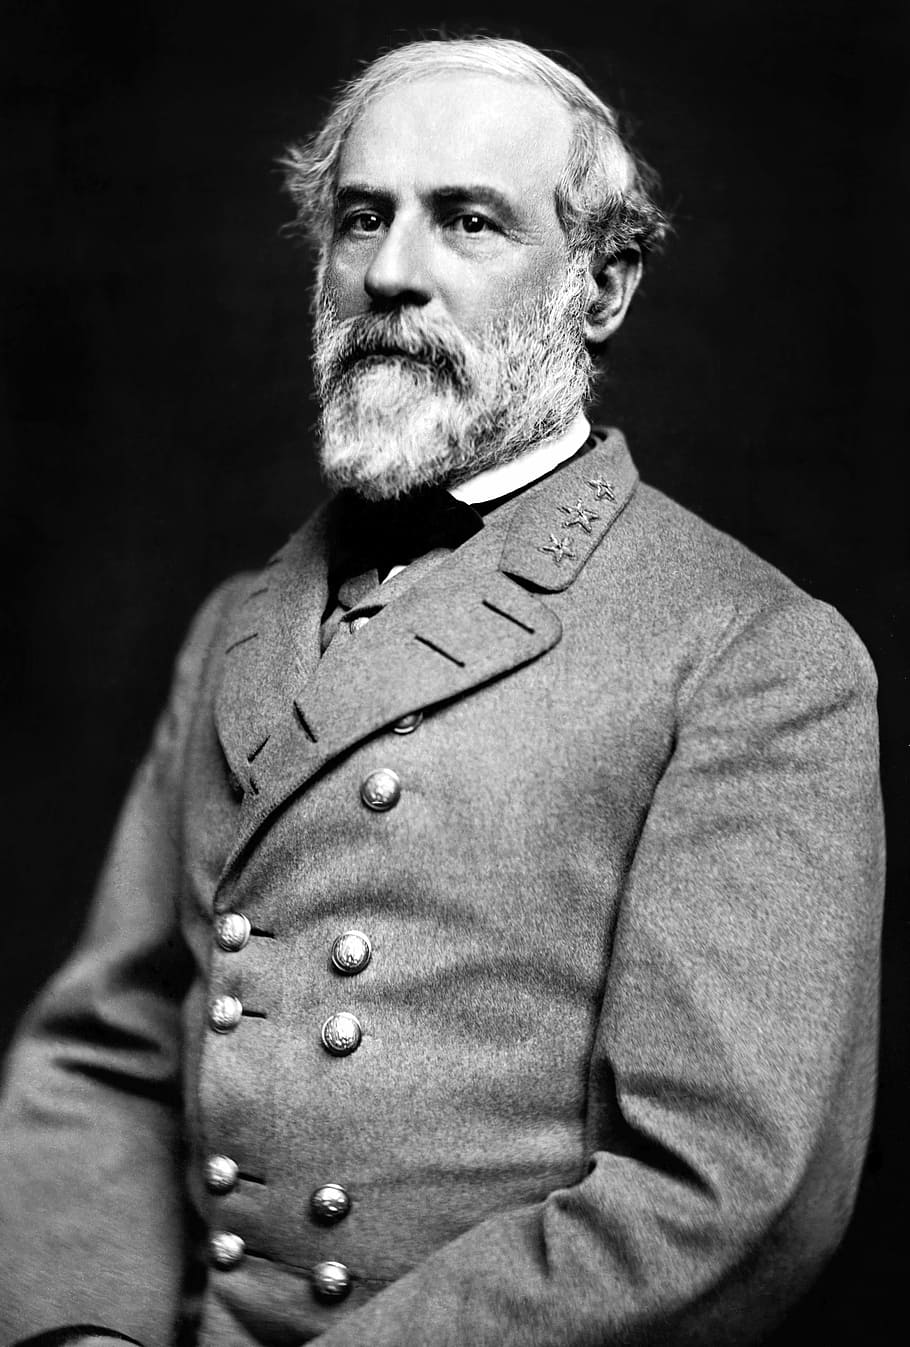 robert e, e。, lee confederate, Robert E. Lee, Confederate, General, army, confederate general, photos, history